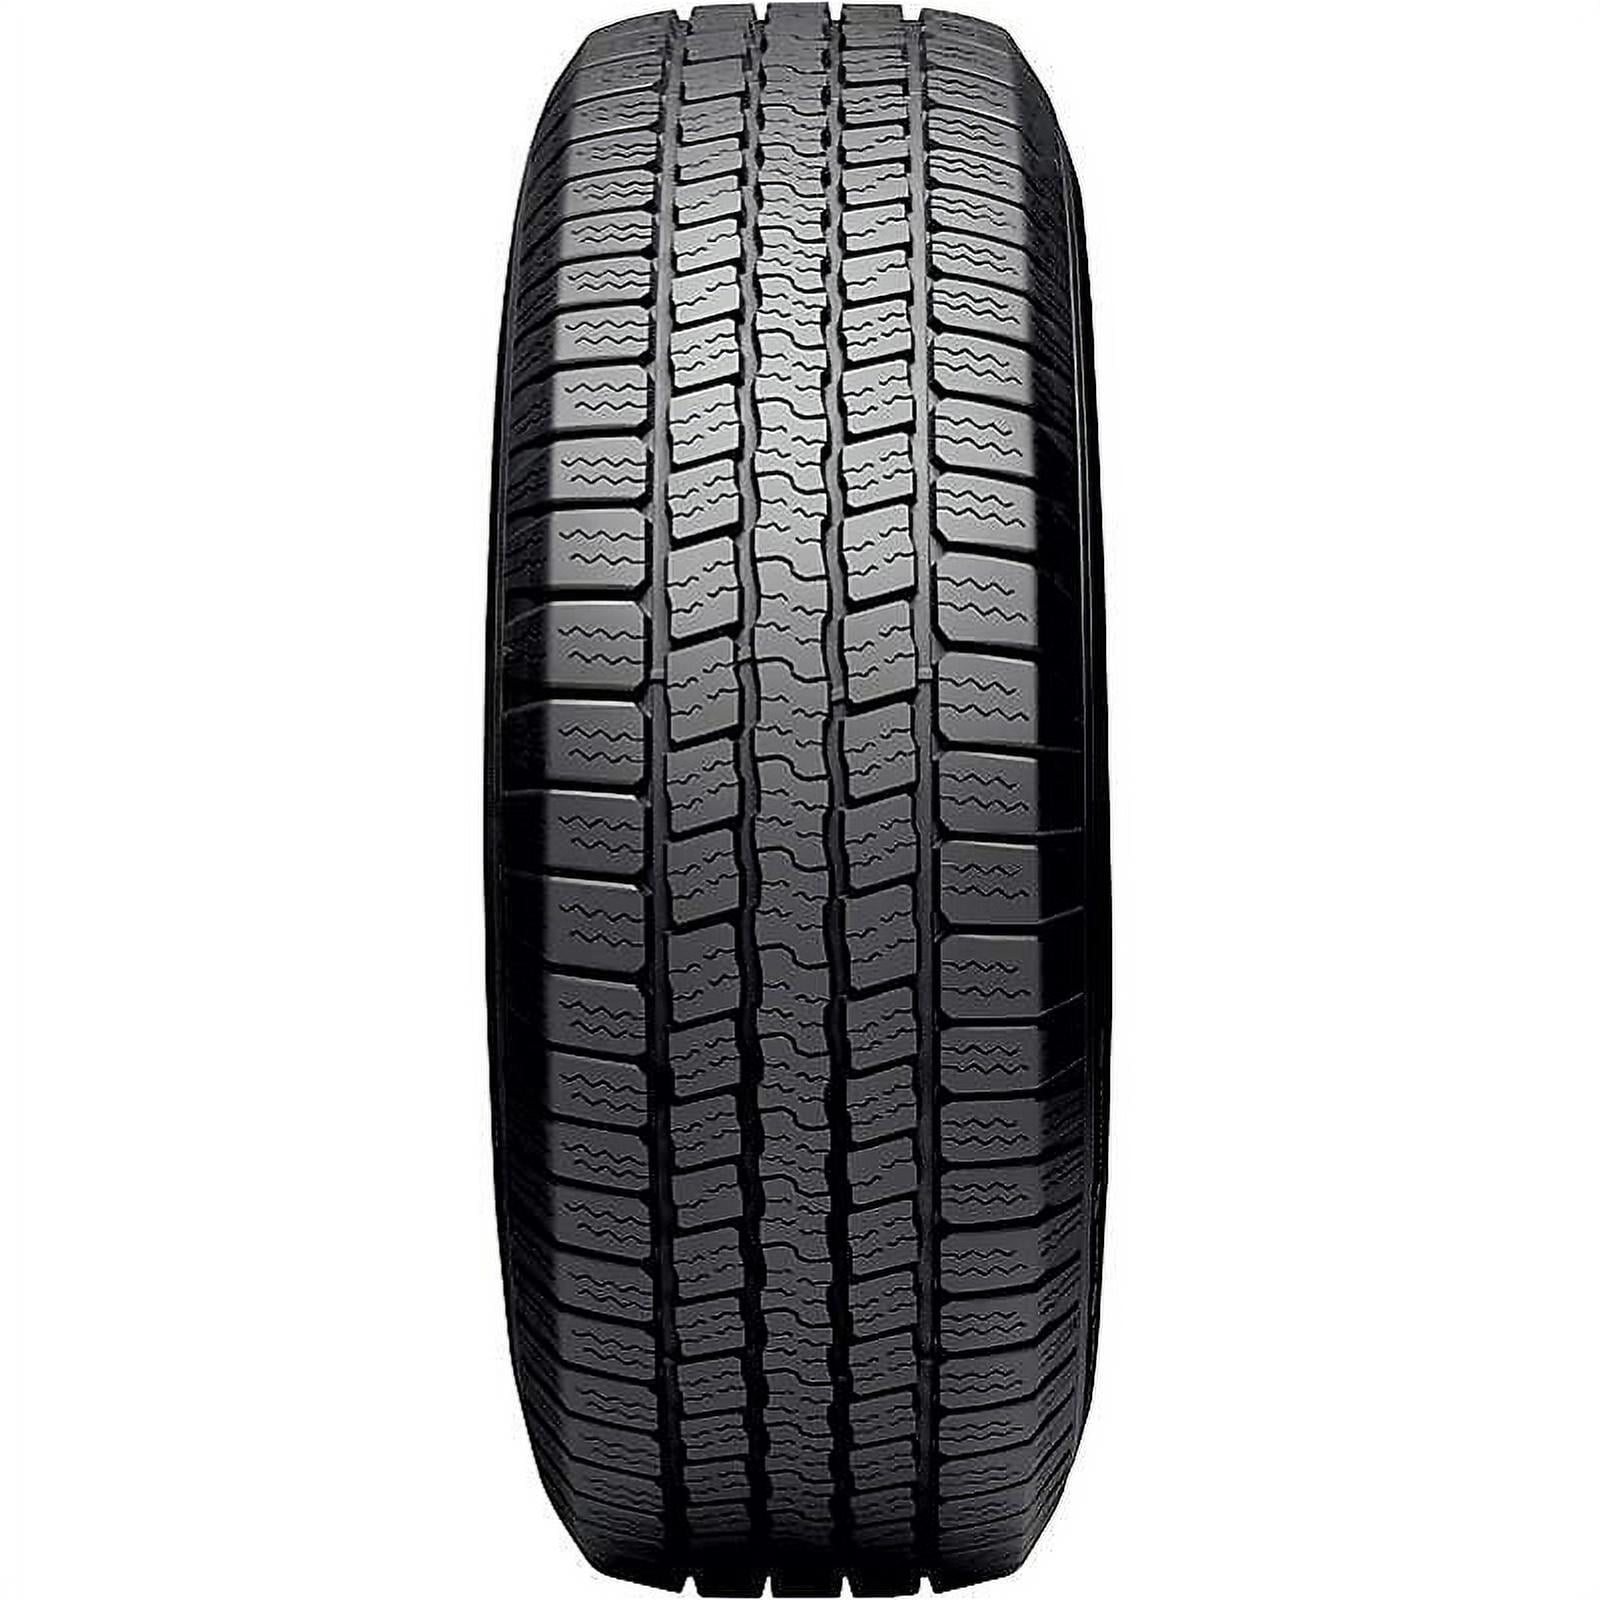 Goodyear Wrangler SR-A LT265/60R20 121S VSB Highway tire 